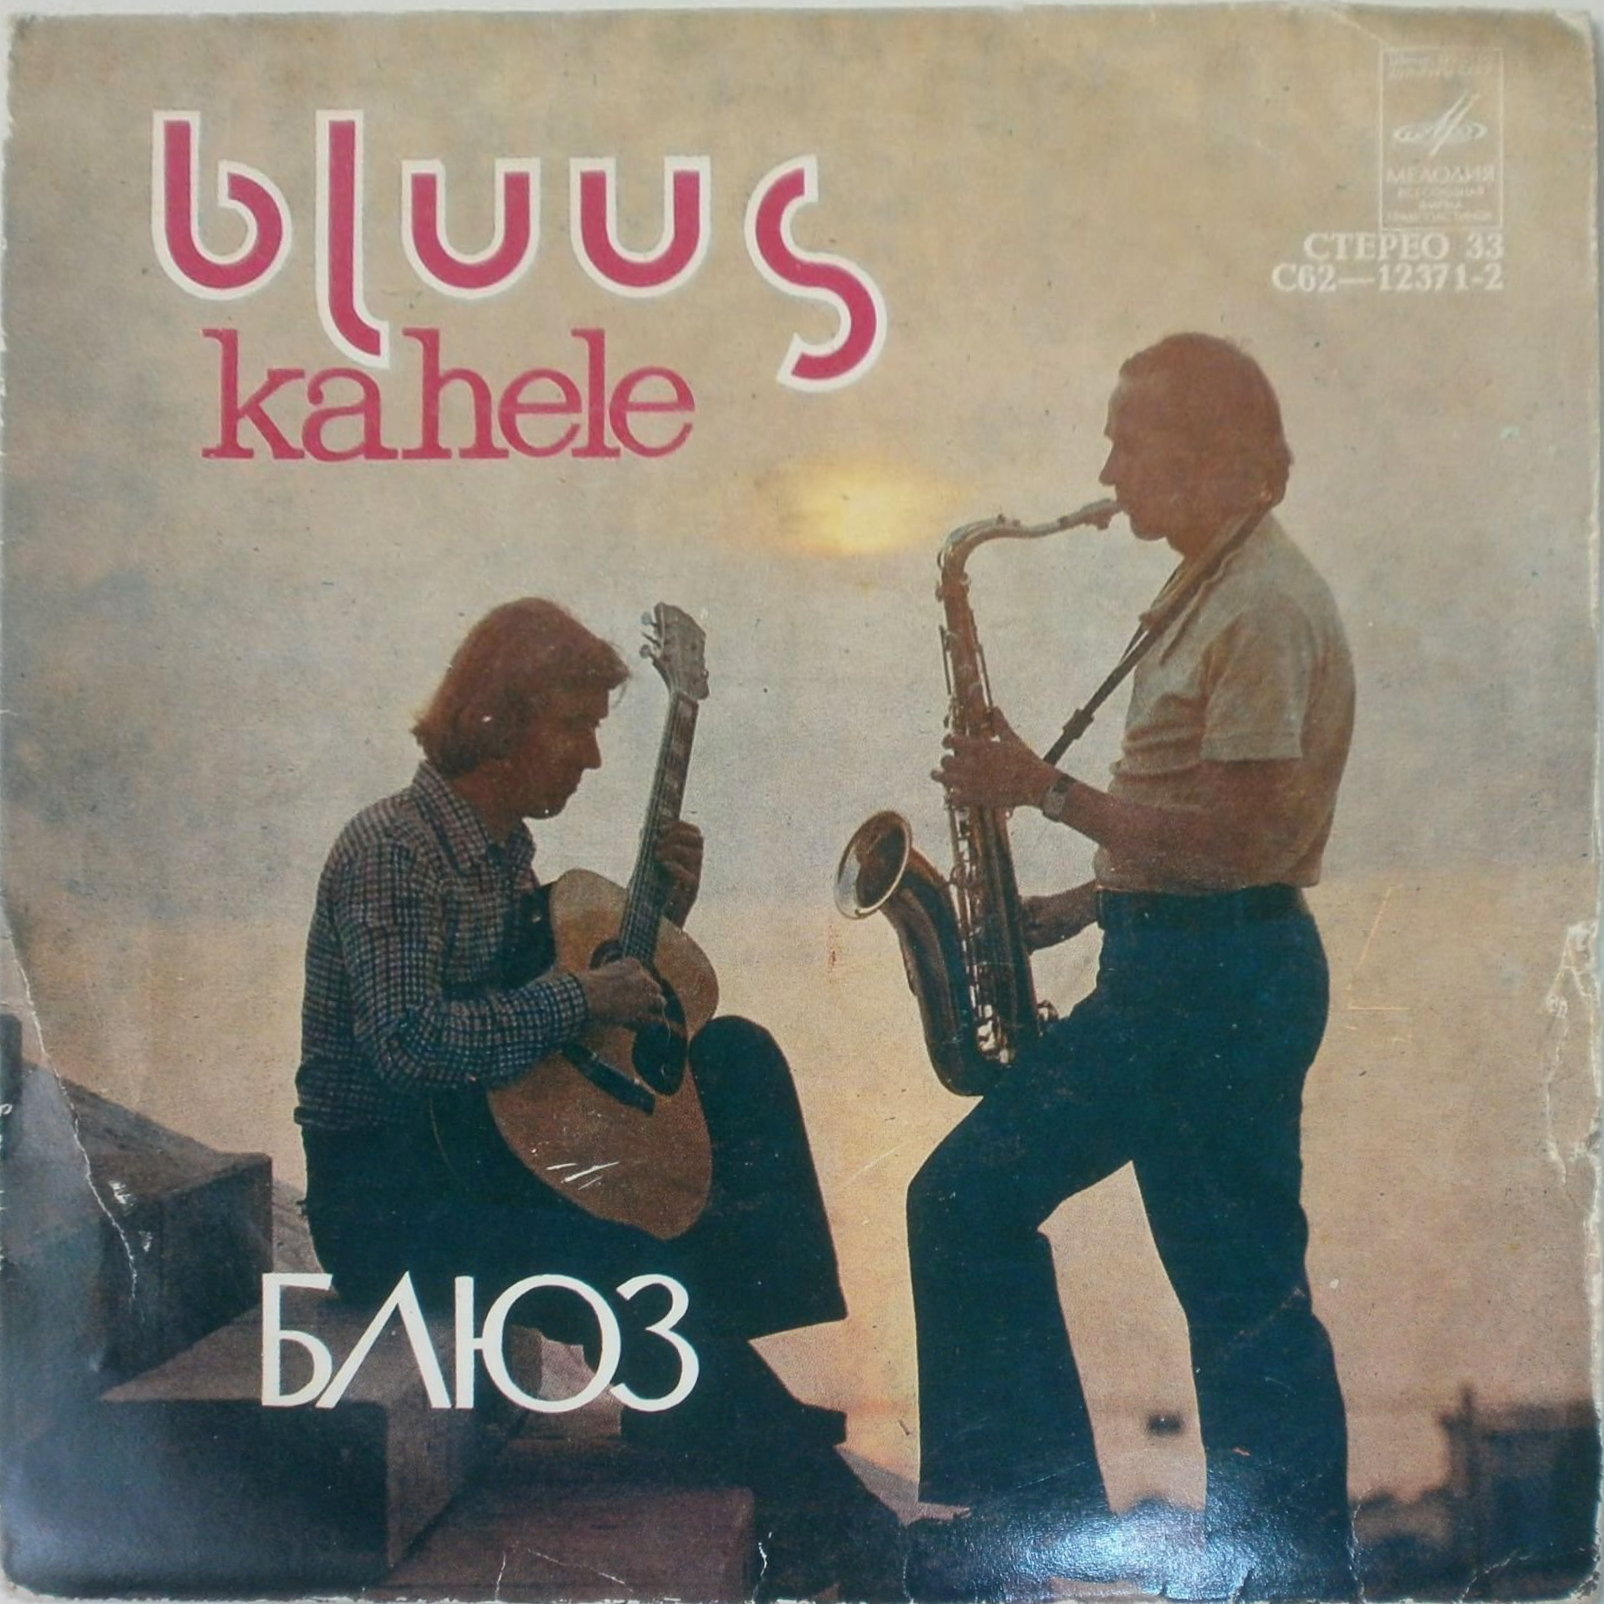 БЛЮЗ ДЛЯ ДВОИХ (Bluus Kahele). Пиллироог Арво (саксофон), Паулус Тийт (гитара).